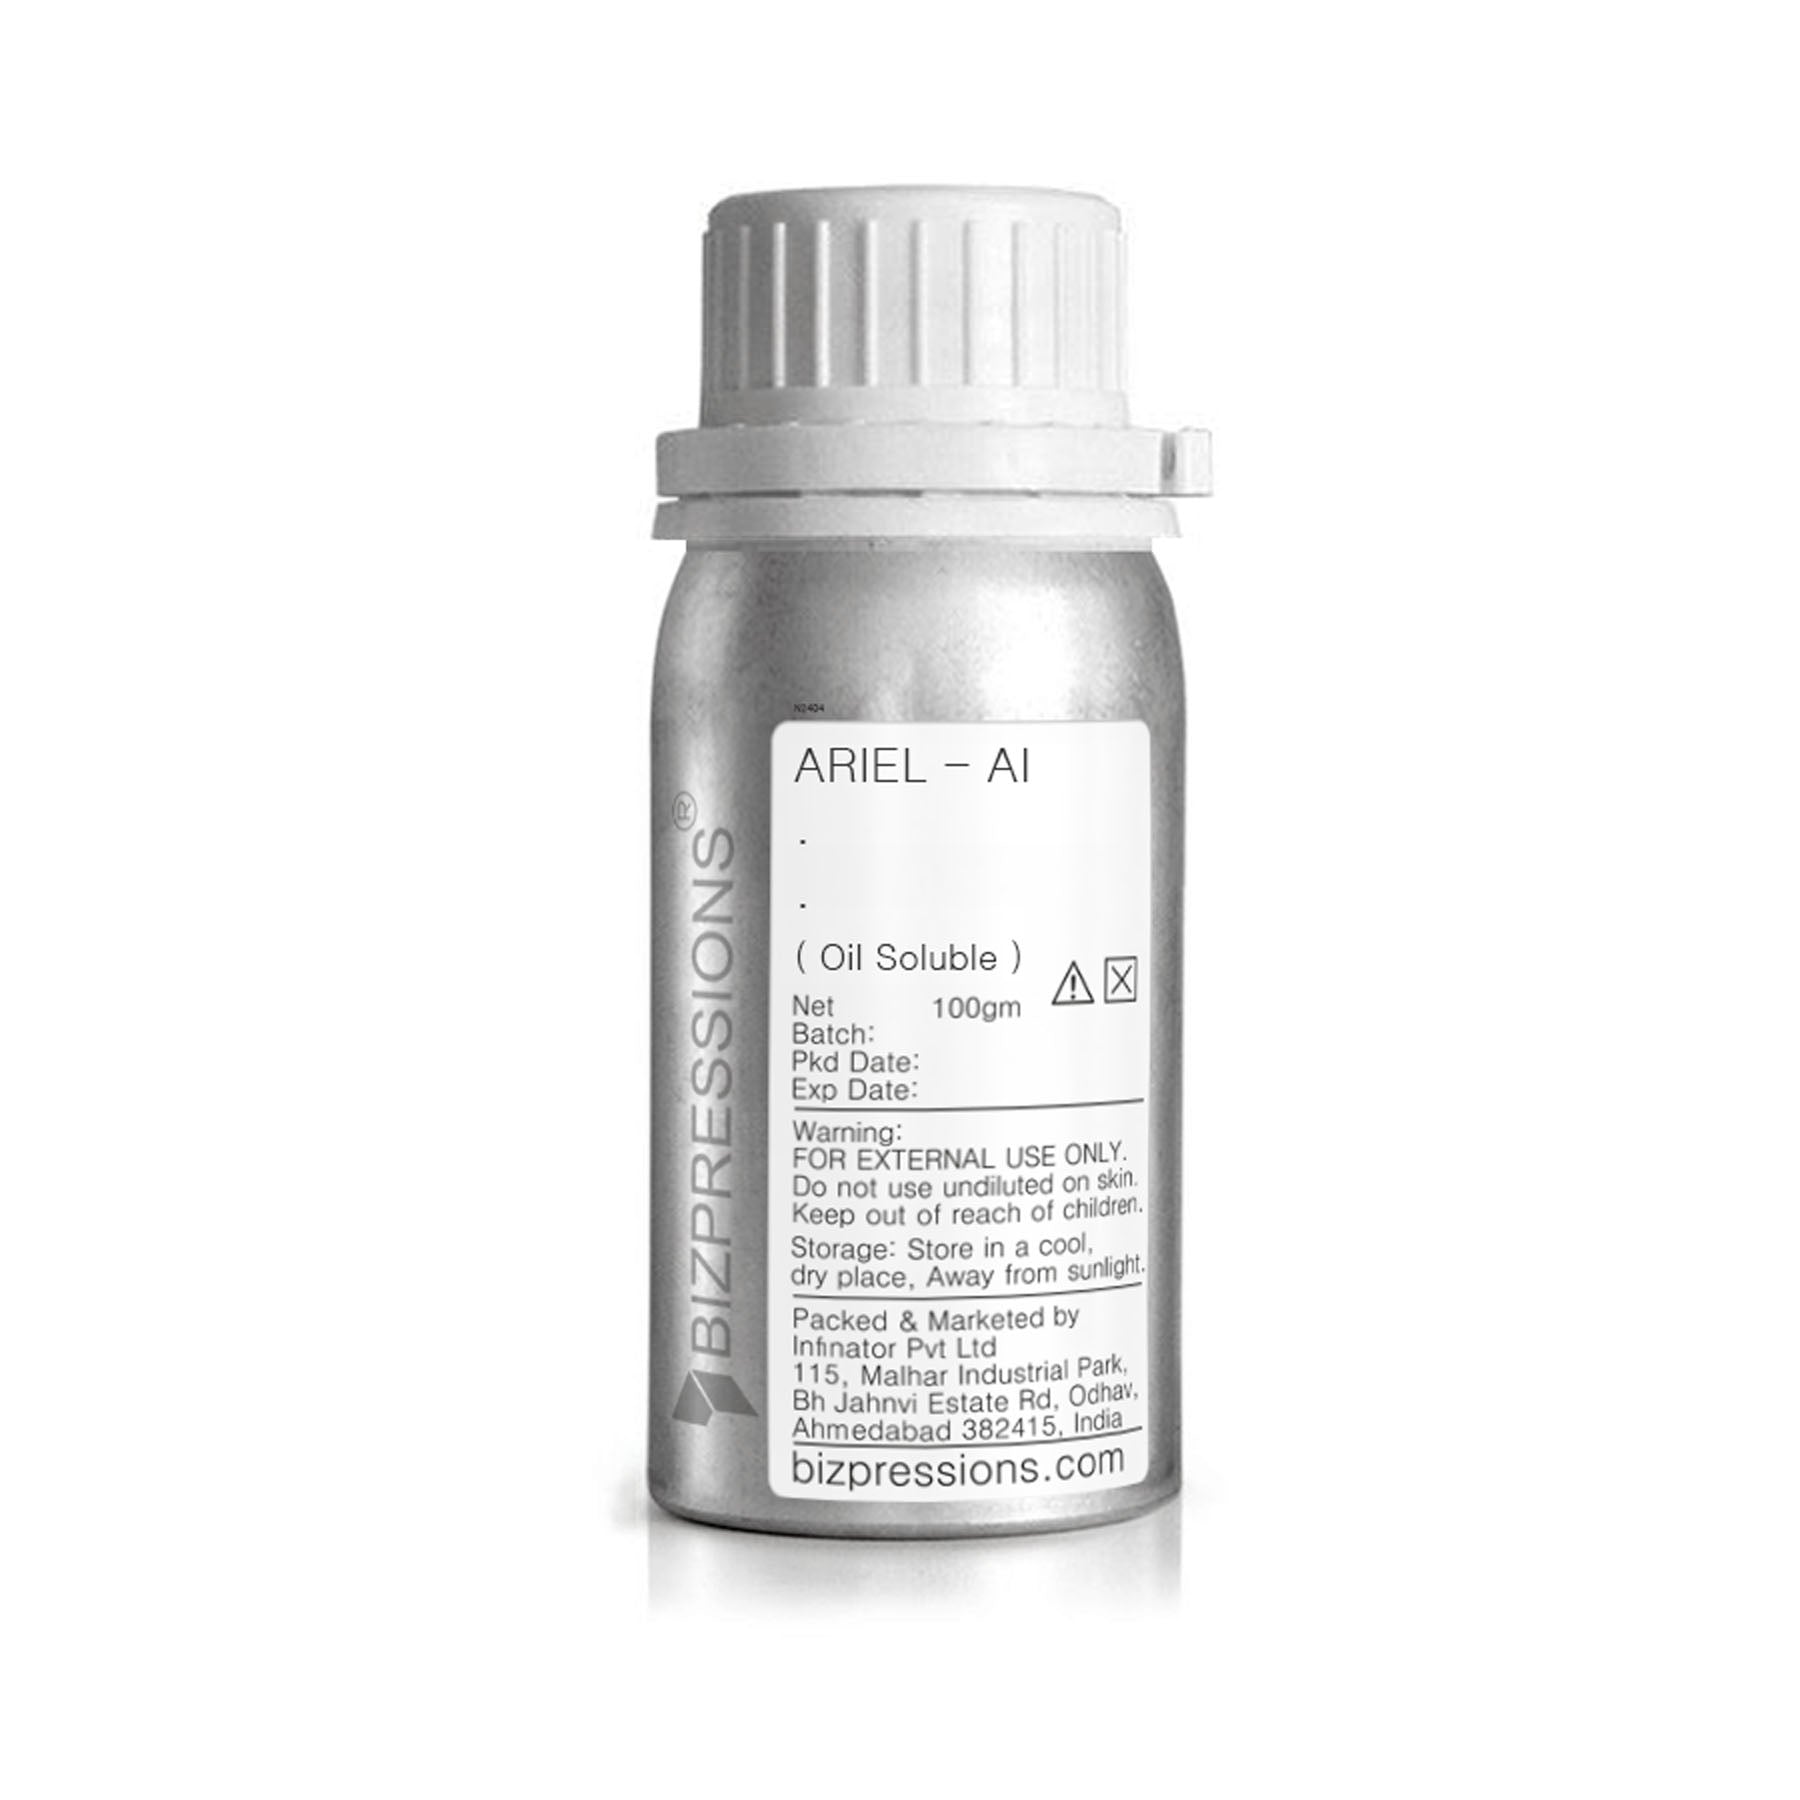 ARIEL - AI - Fragrance ( Oil Soluble ) - 100 gm